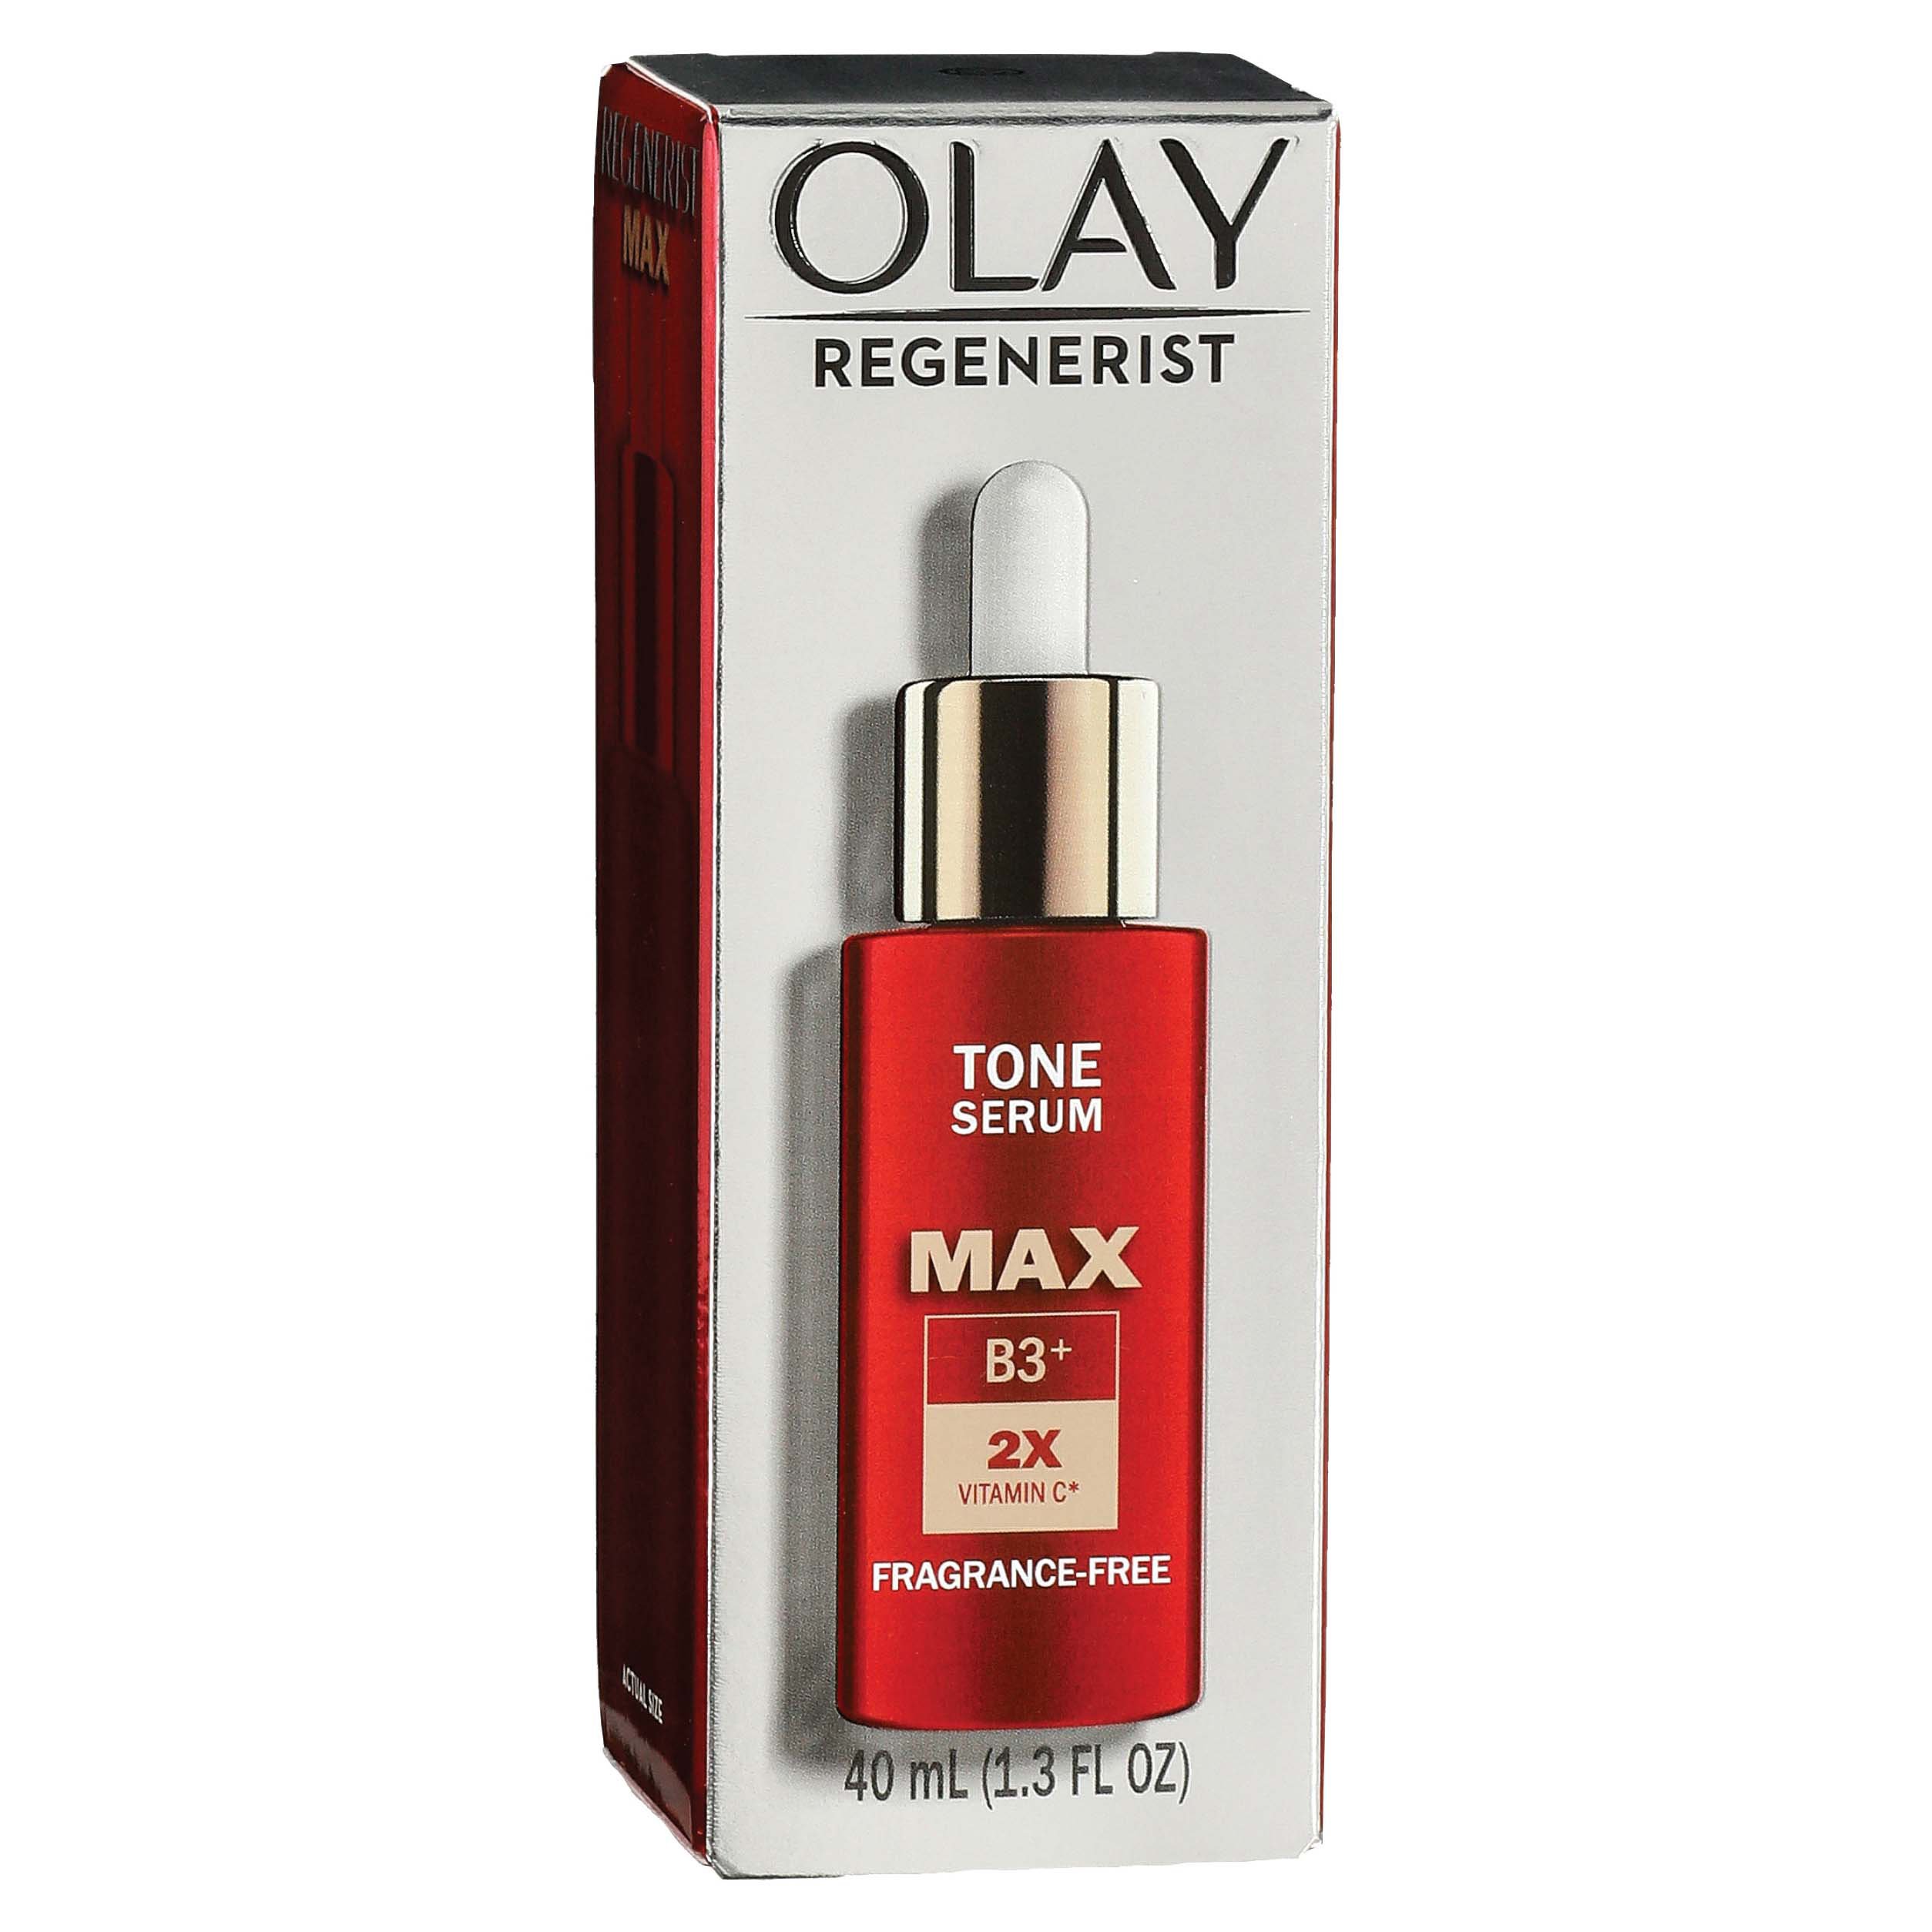 olay-regenerist-tone-serum-max-shop-facial-masks-treatments-at-h-e-b